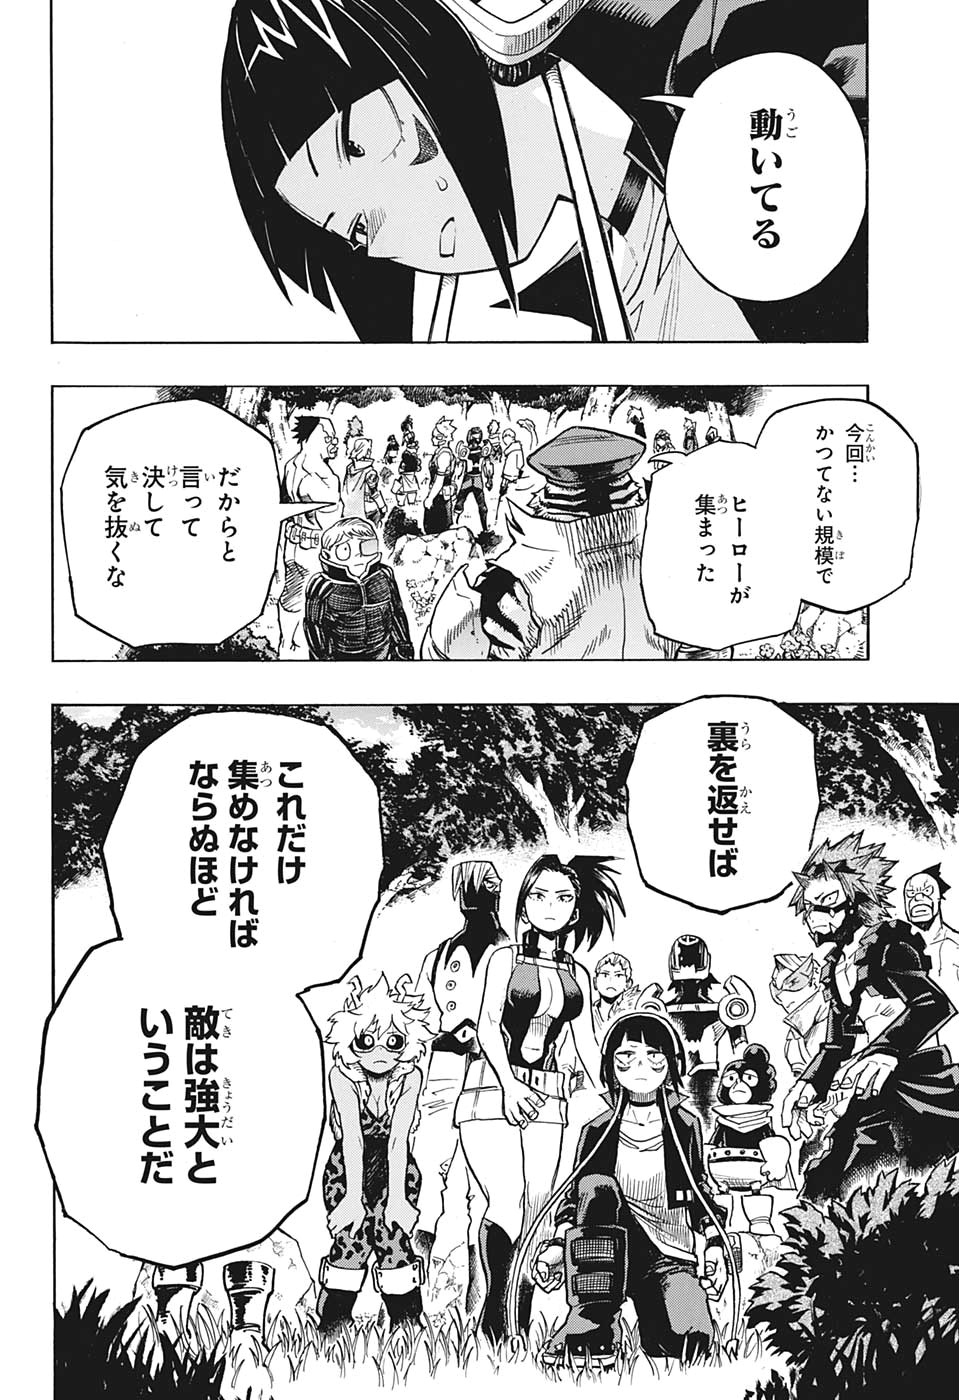 Boku no Hero Academia - Chapter 263 - Page 2